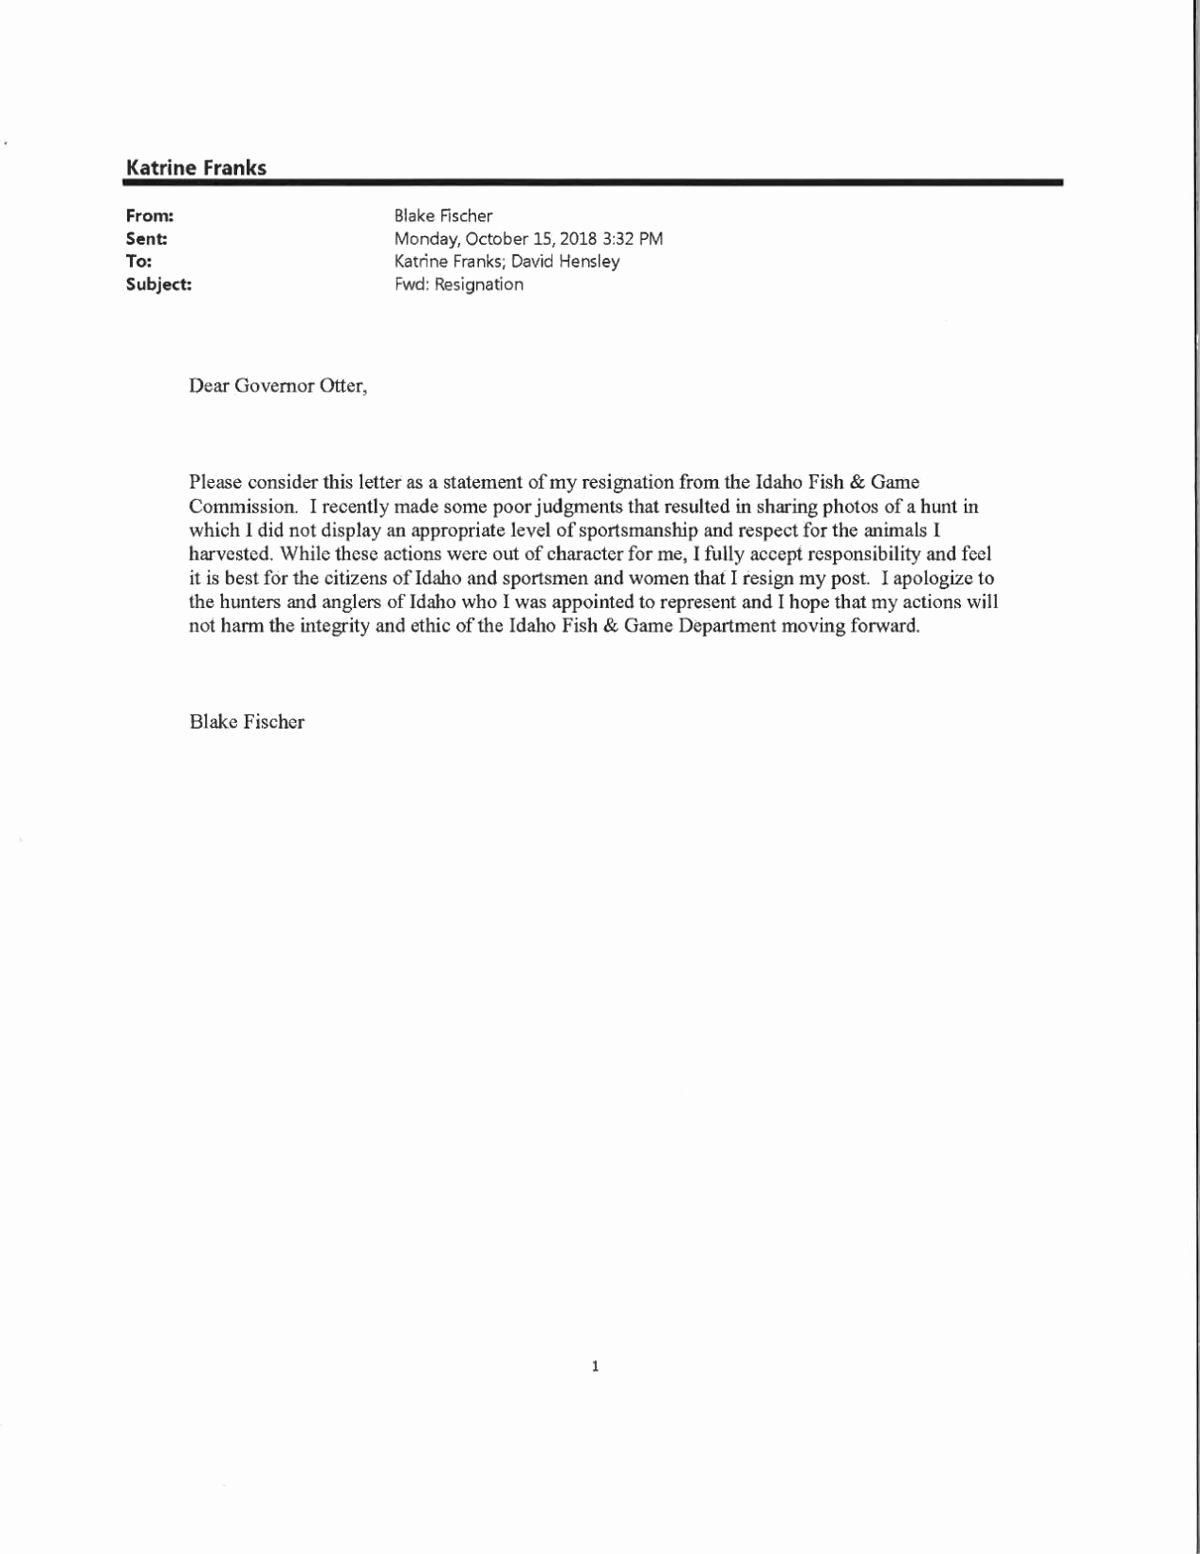 Lox Letter Example Best Of Blake Fischer’s Resignation Letter